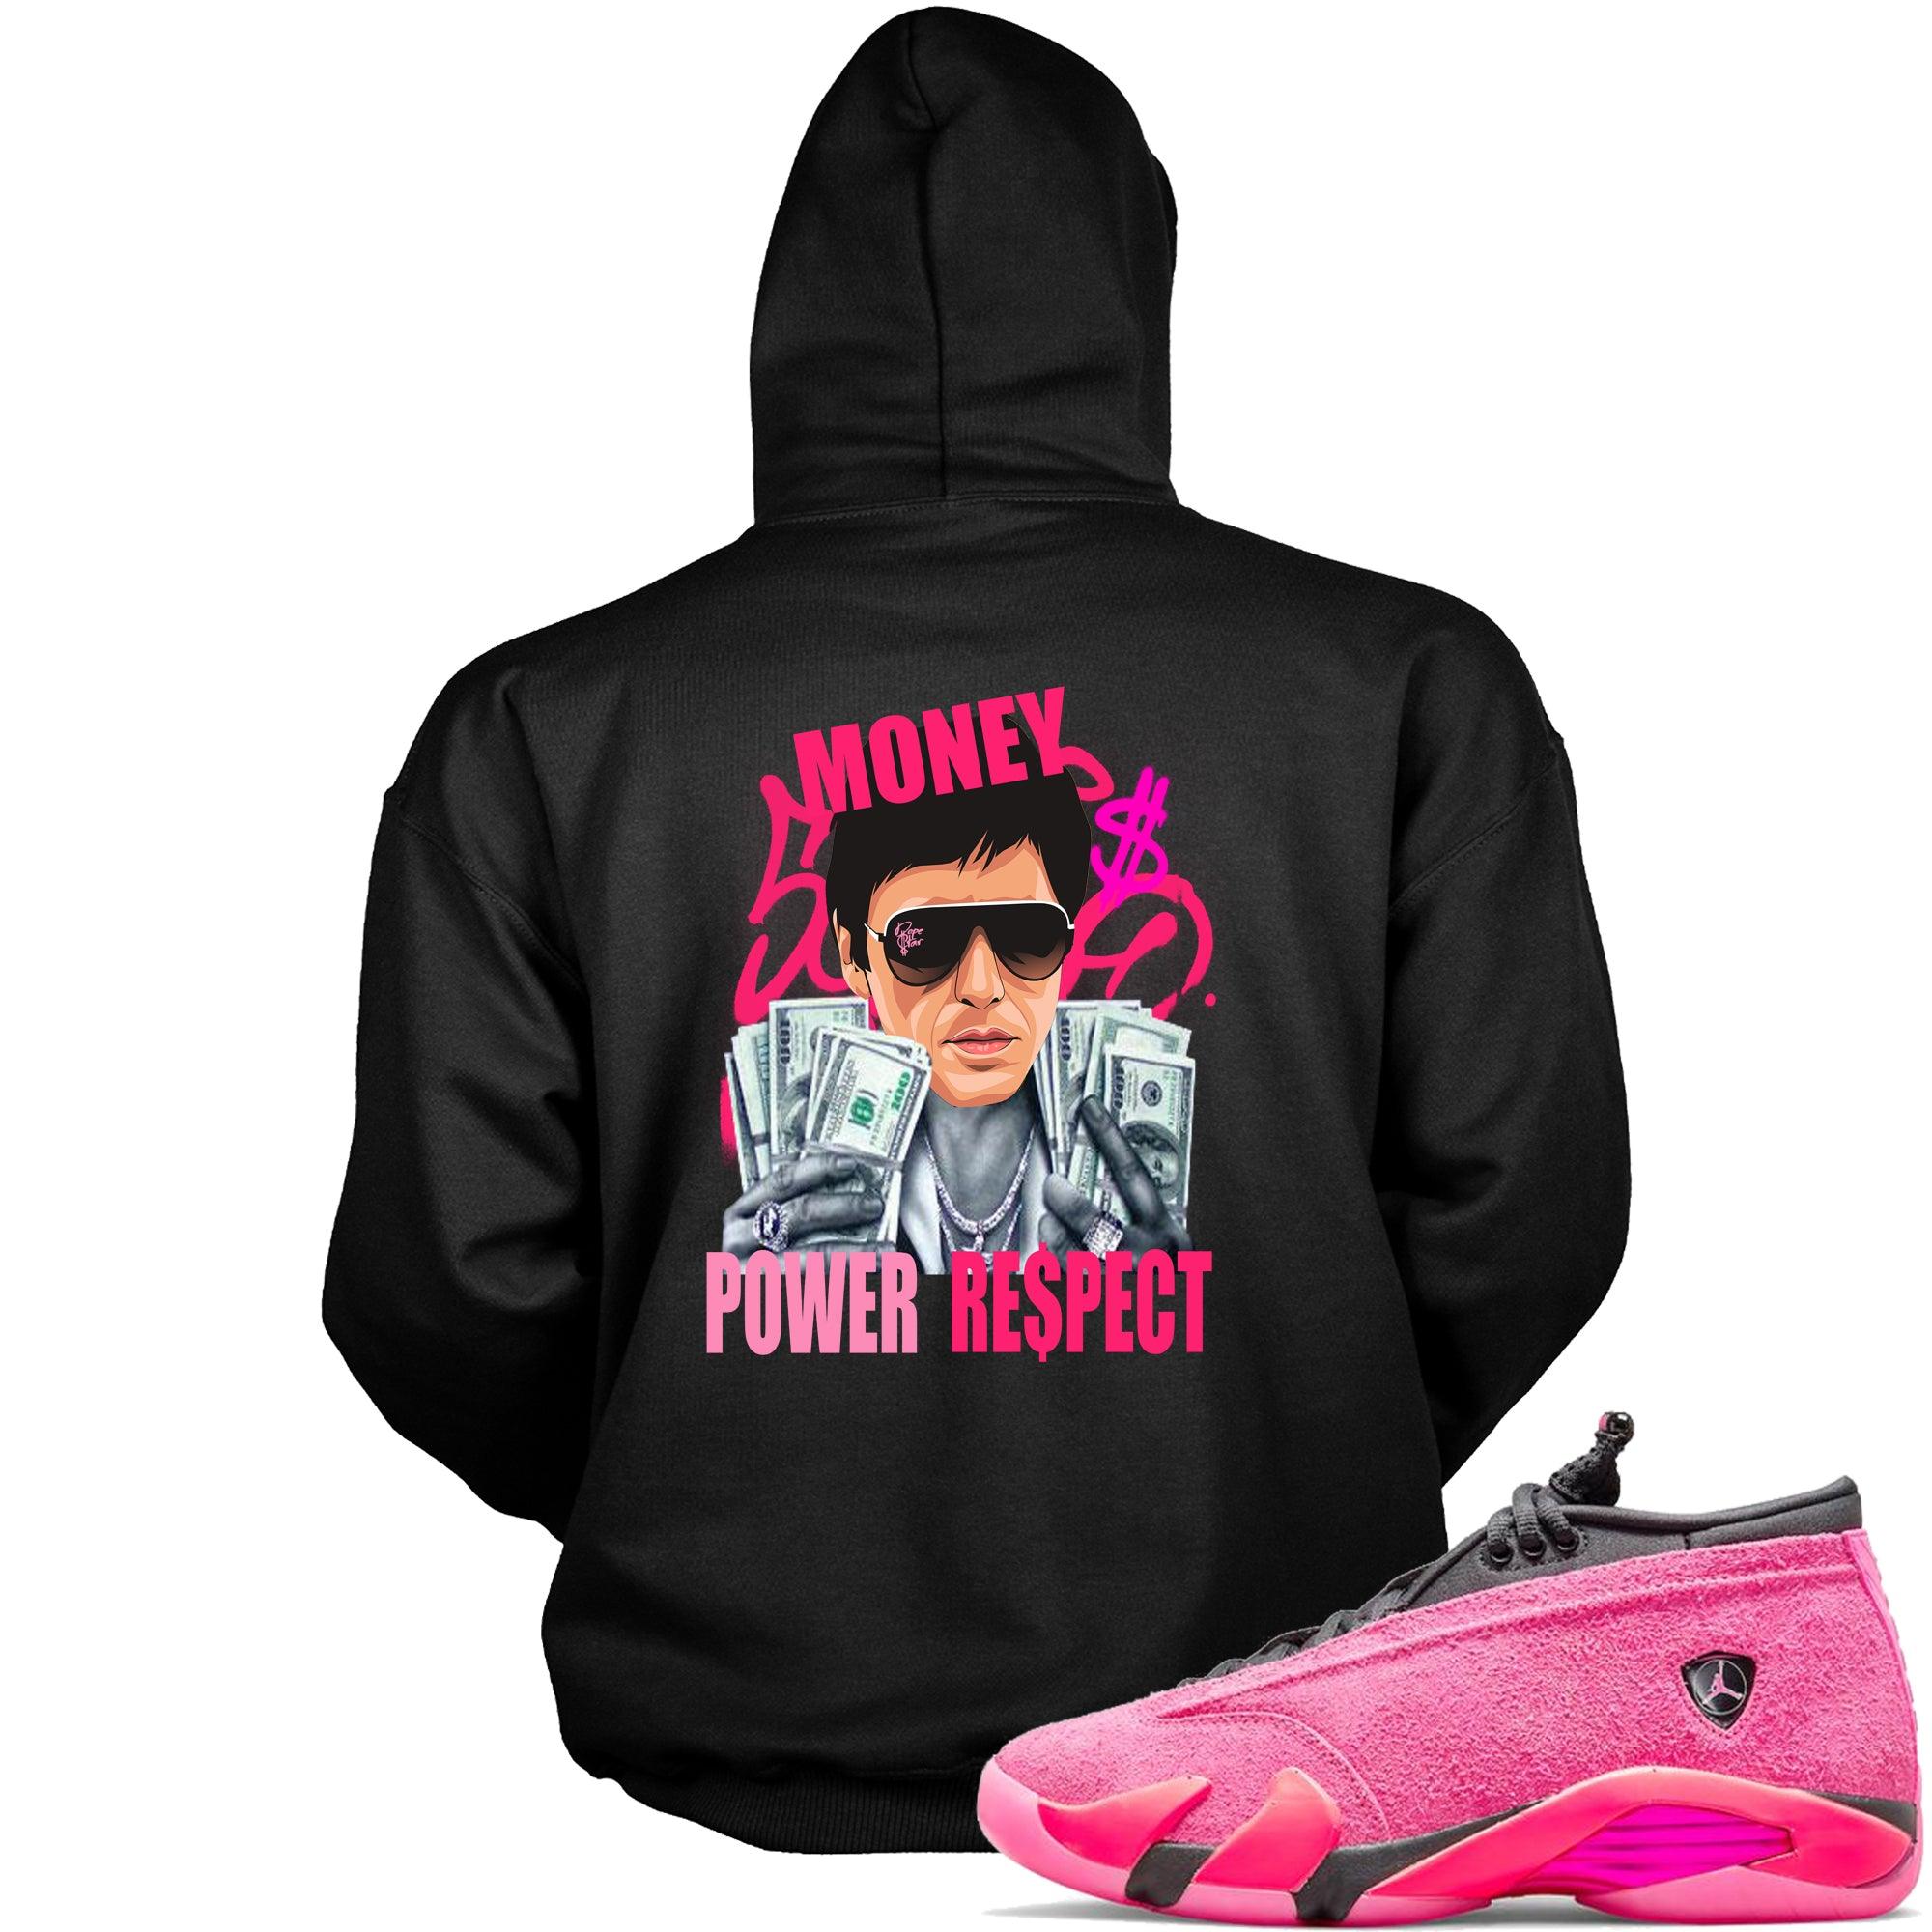 Tony Montana Sneaker Sweatshirt AJ 14 Low Shocking Pink photo